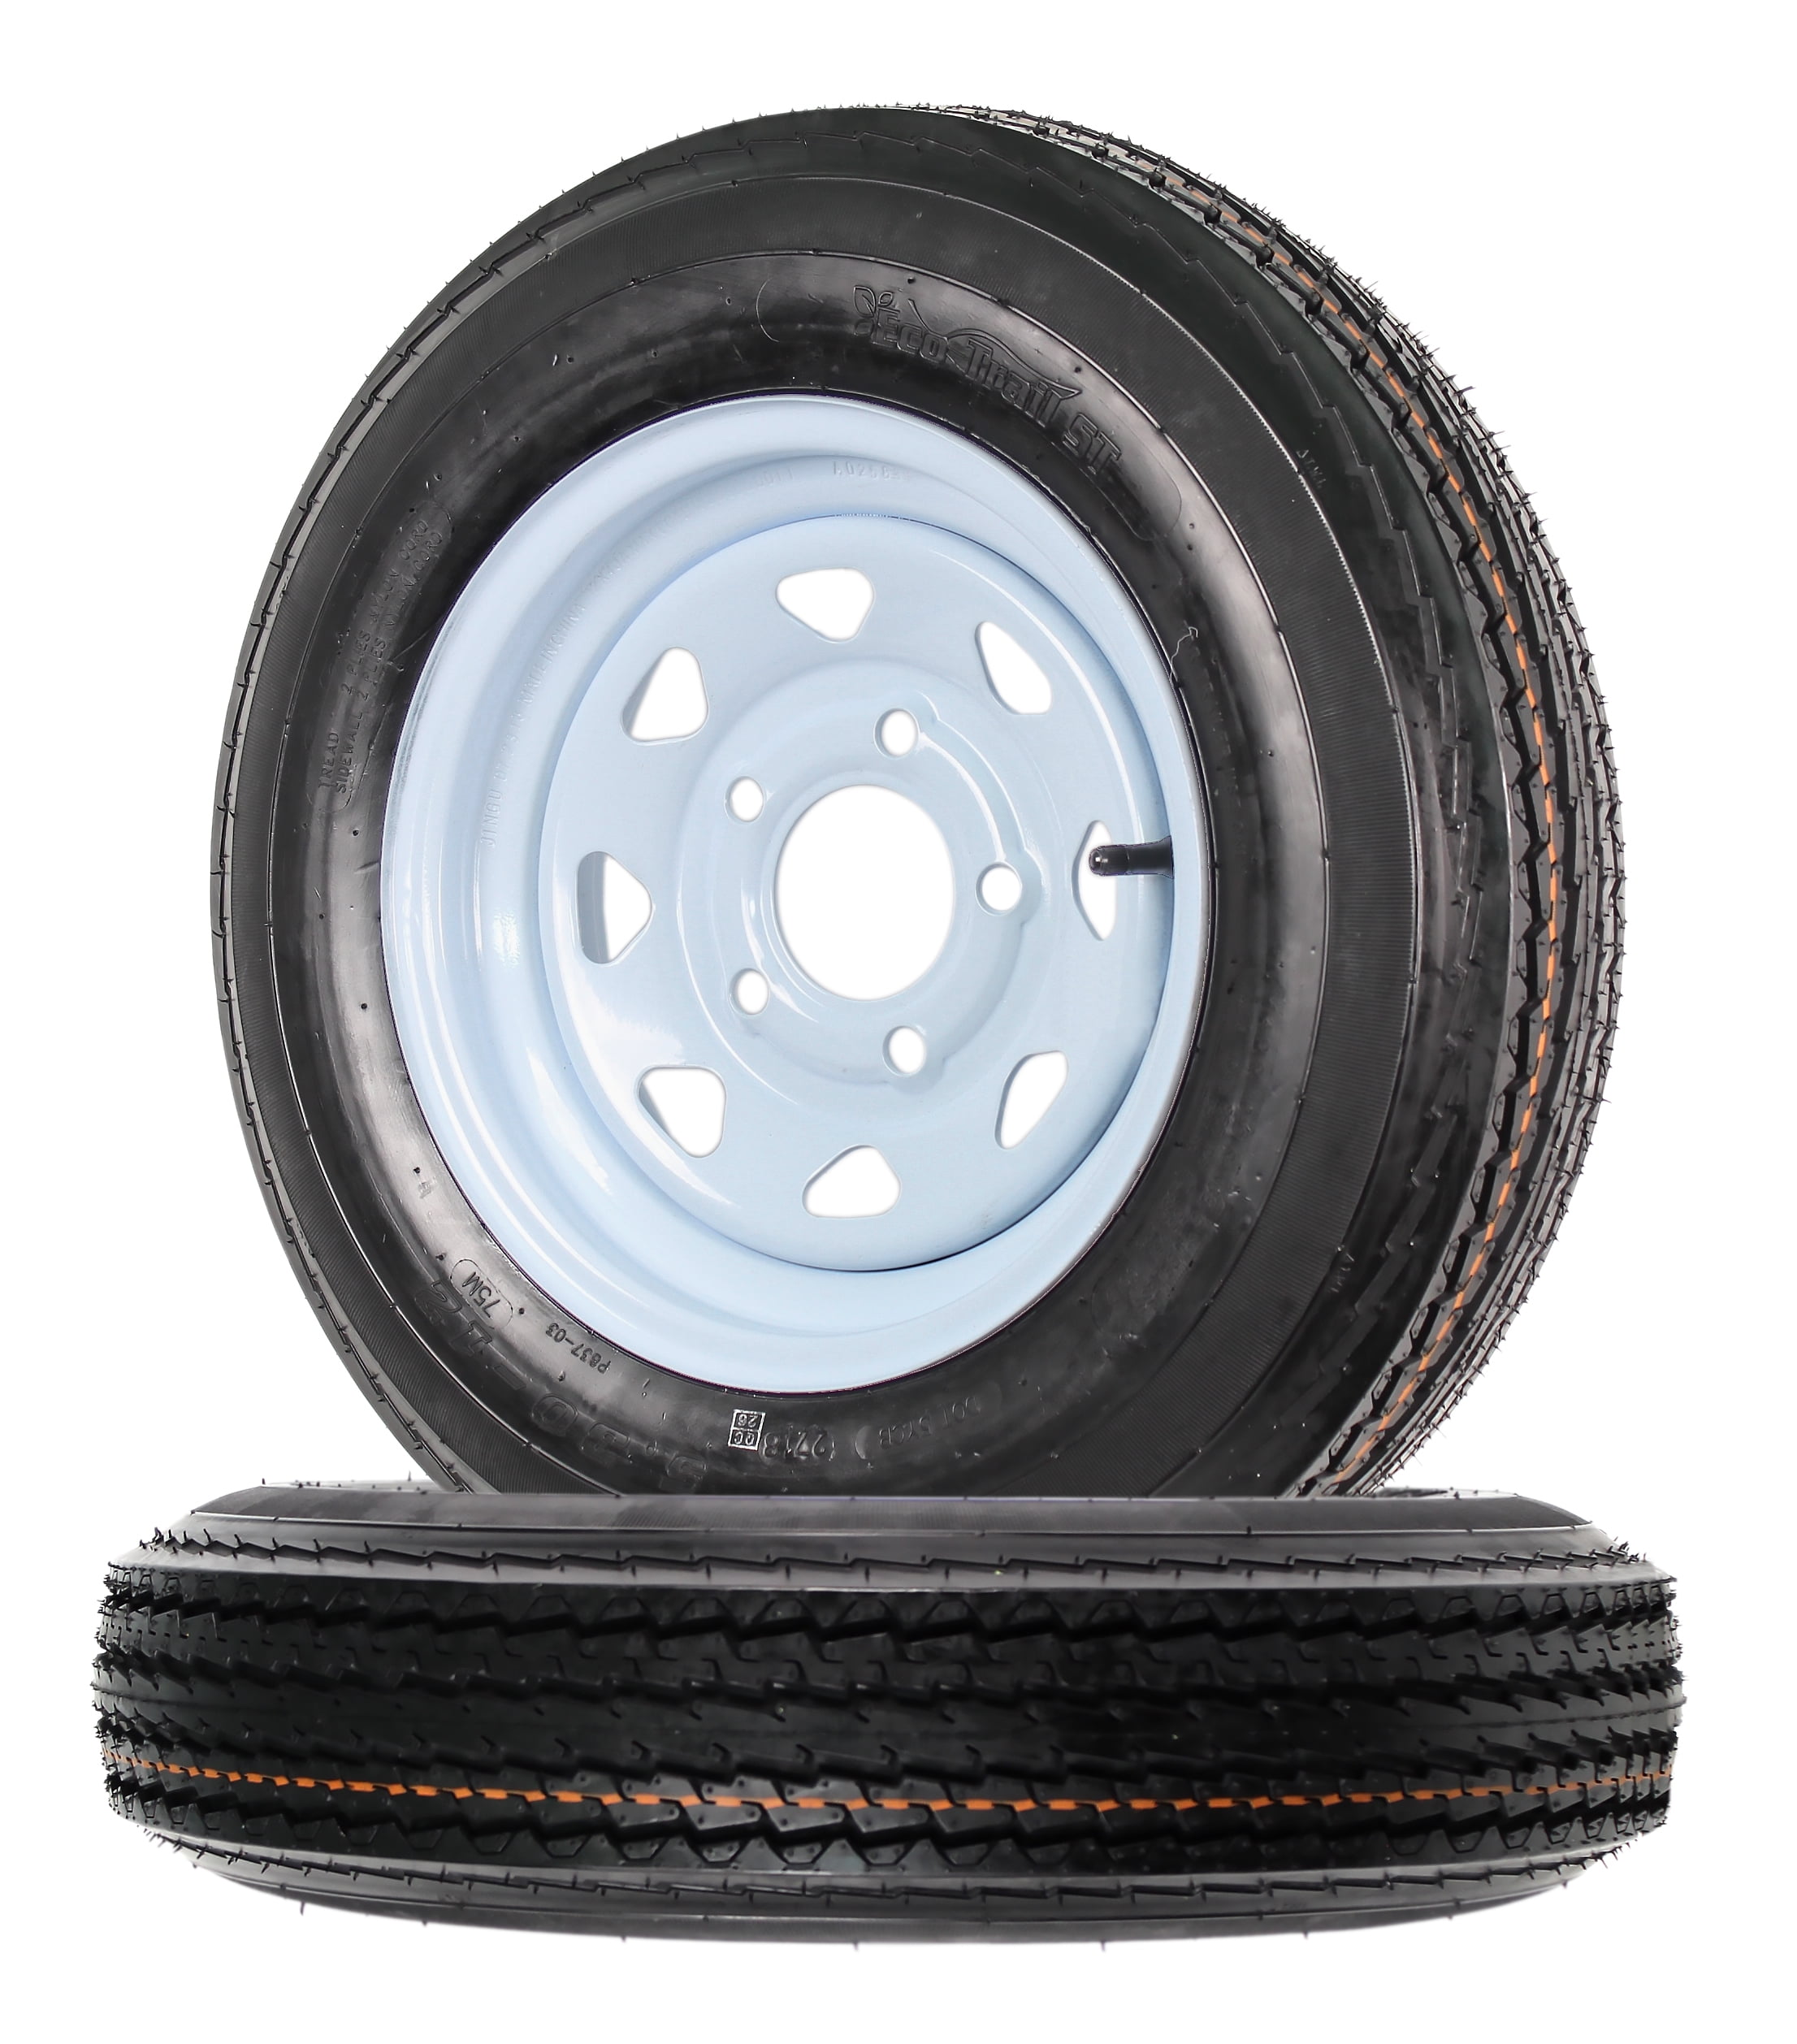 Roadstar Pair of 2 Trailer Tires & Rims 5.30-12 530-12 5.30x12 12 LRB 5 Lug/4.5 Hole Bolt White Spoke Wheel 